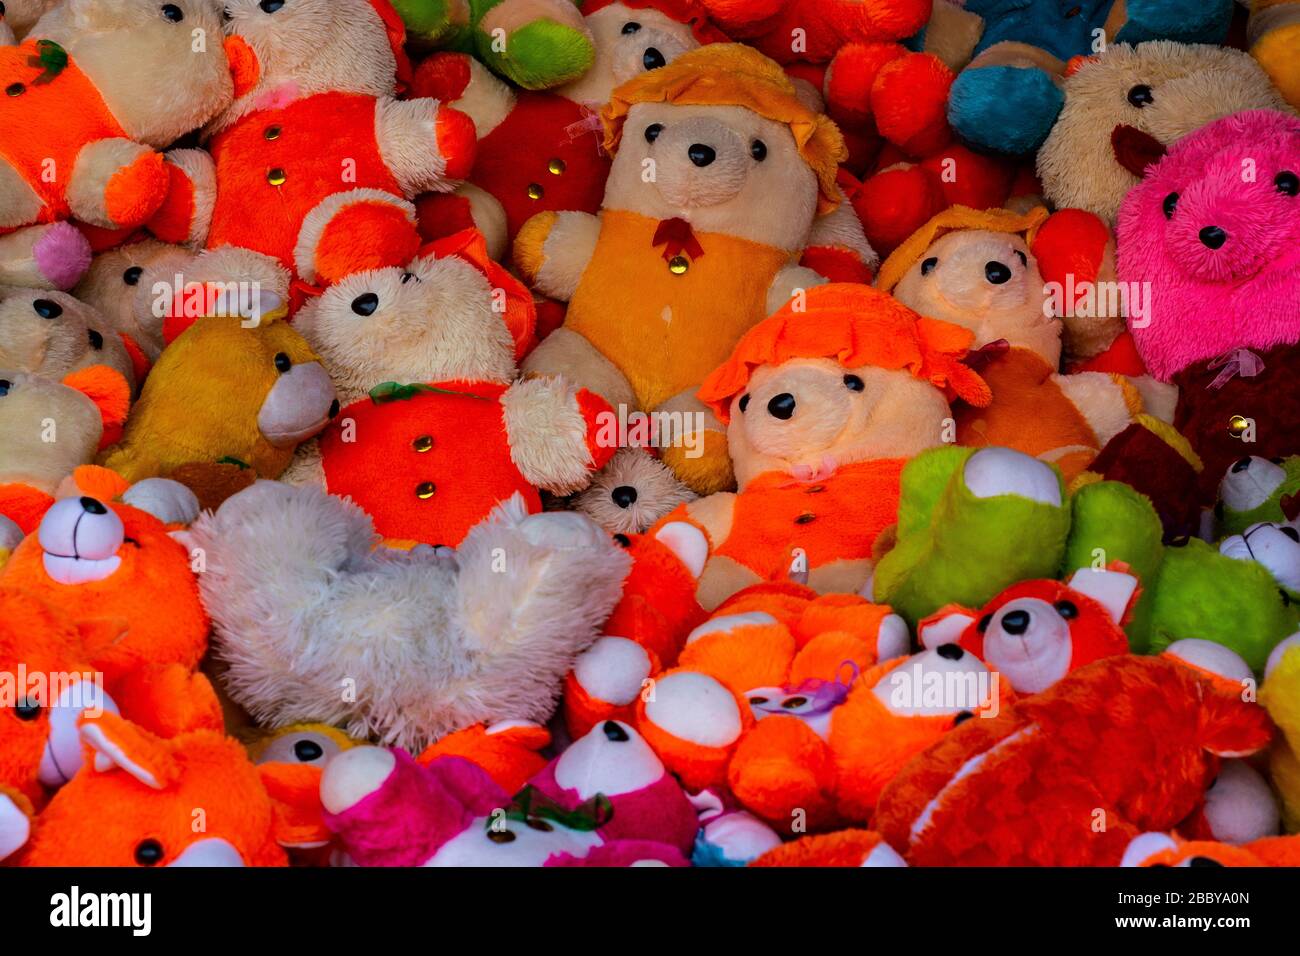 https://c8.alamy.com/comp/2BBYA0N/pile-of-soft-fuzzy-childhood-teddy-bear-toys-2BBYA0N.jpg